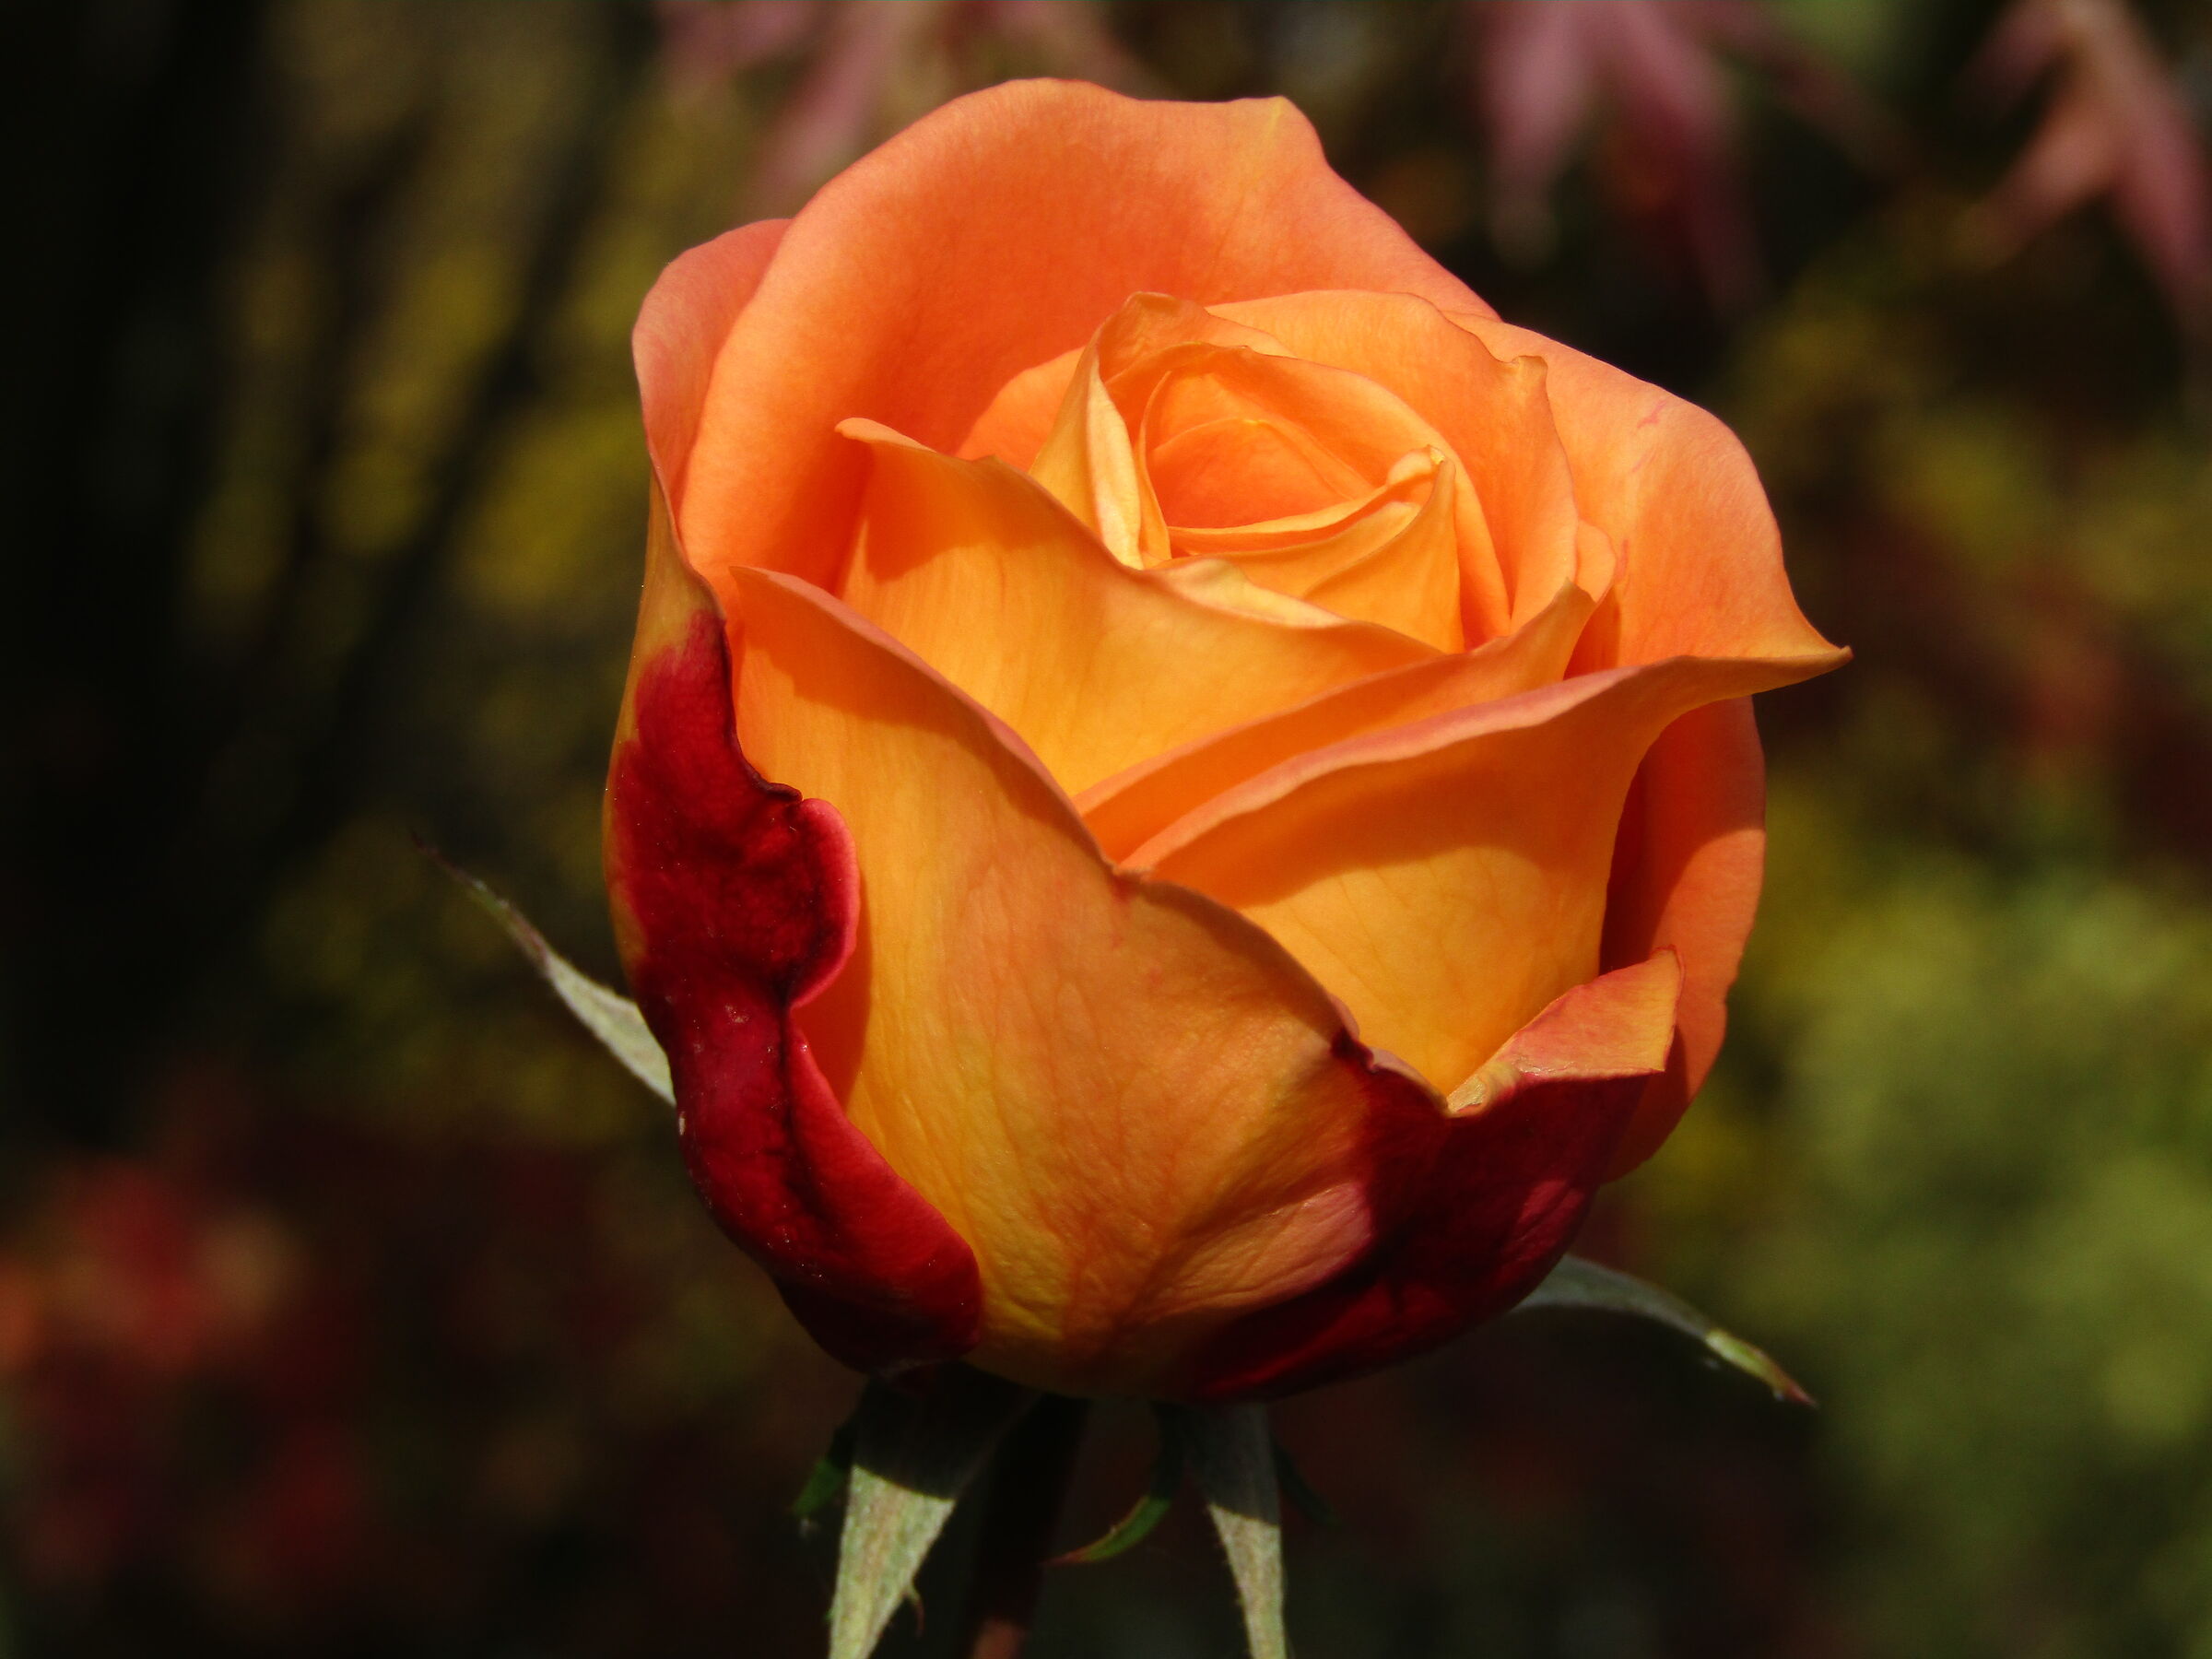 Rose of my garden...